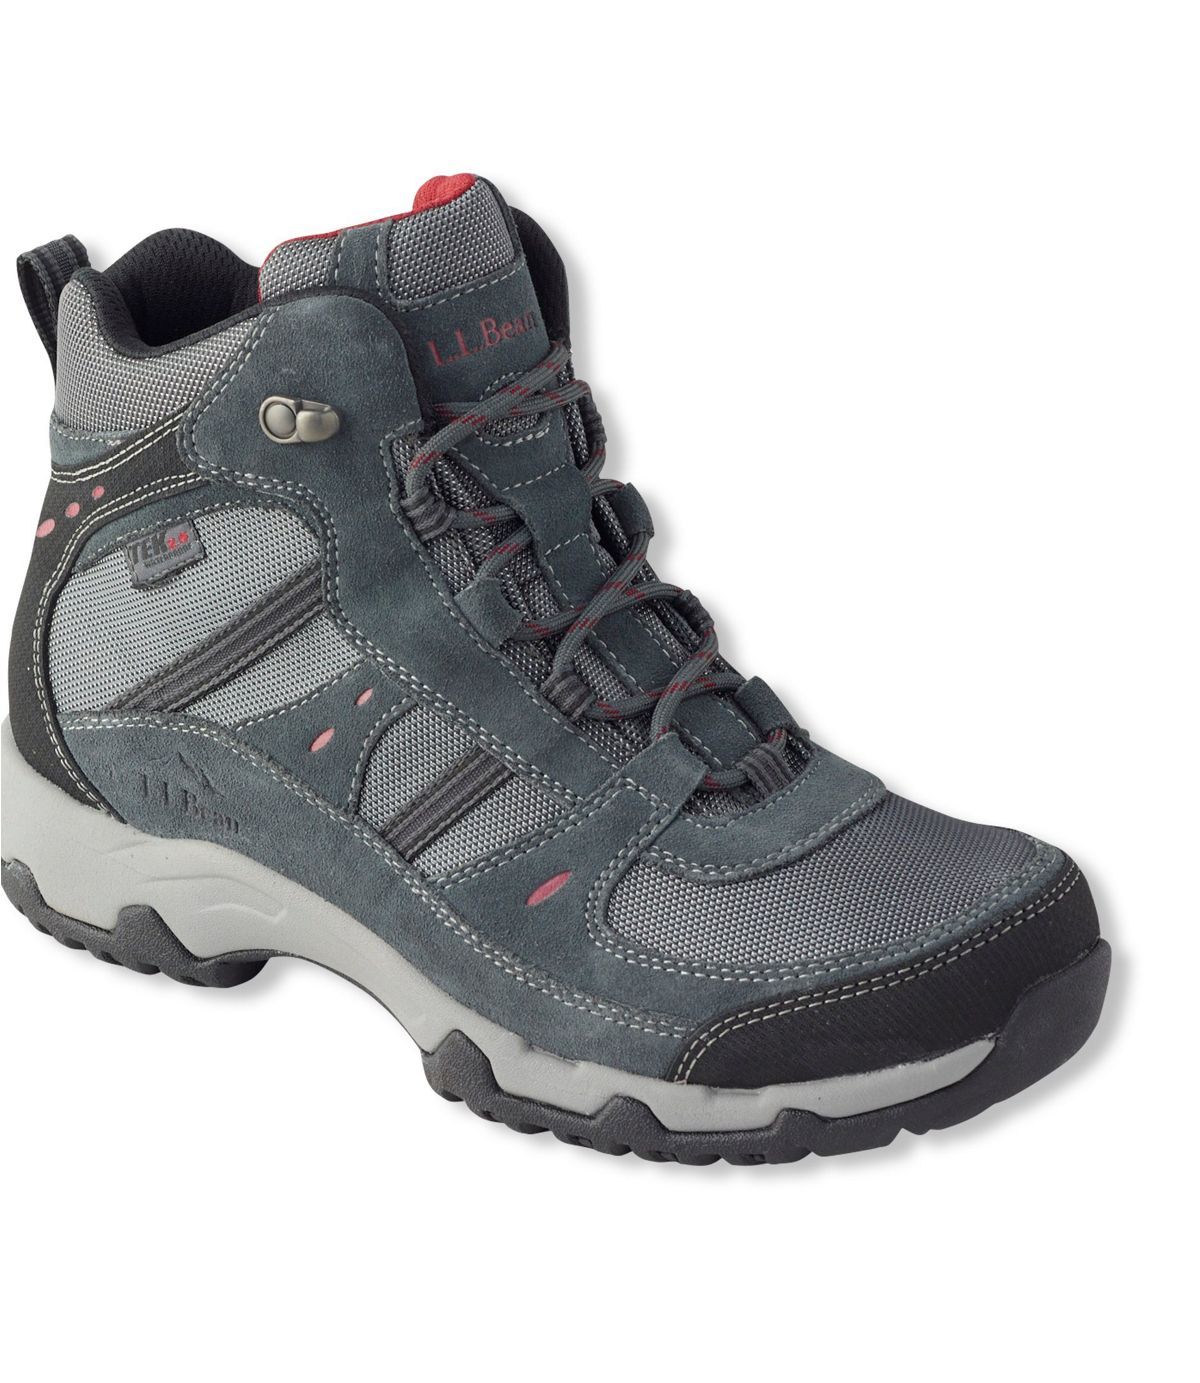 Trail Model 4 Waterproof Hiking Boots